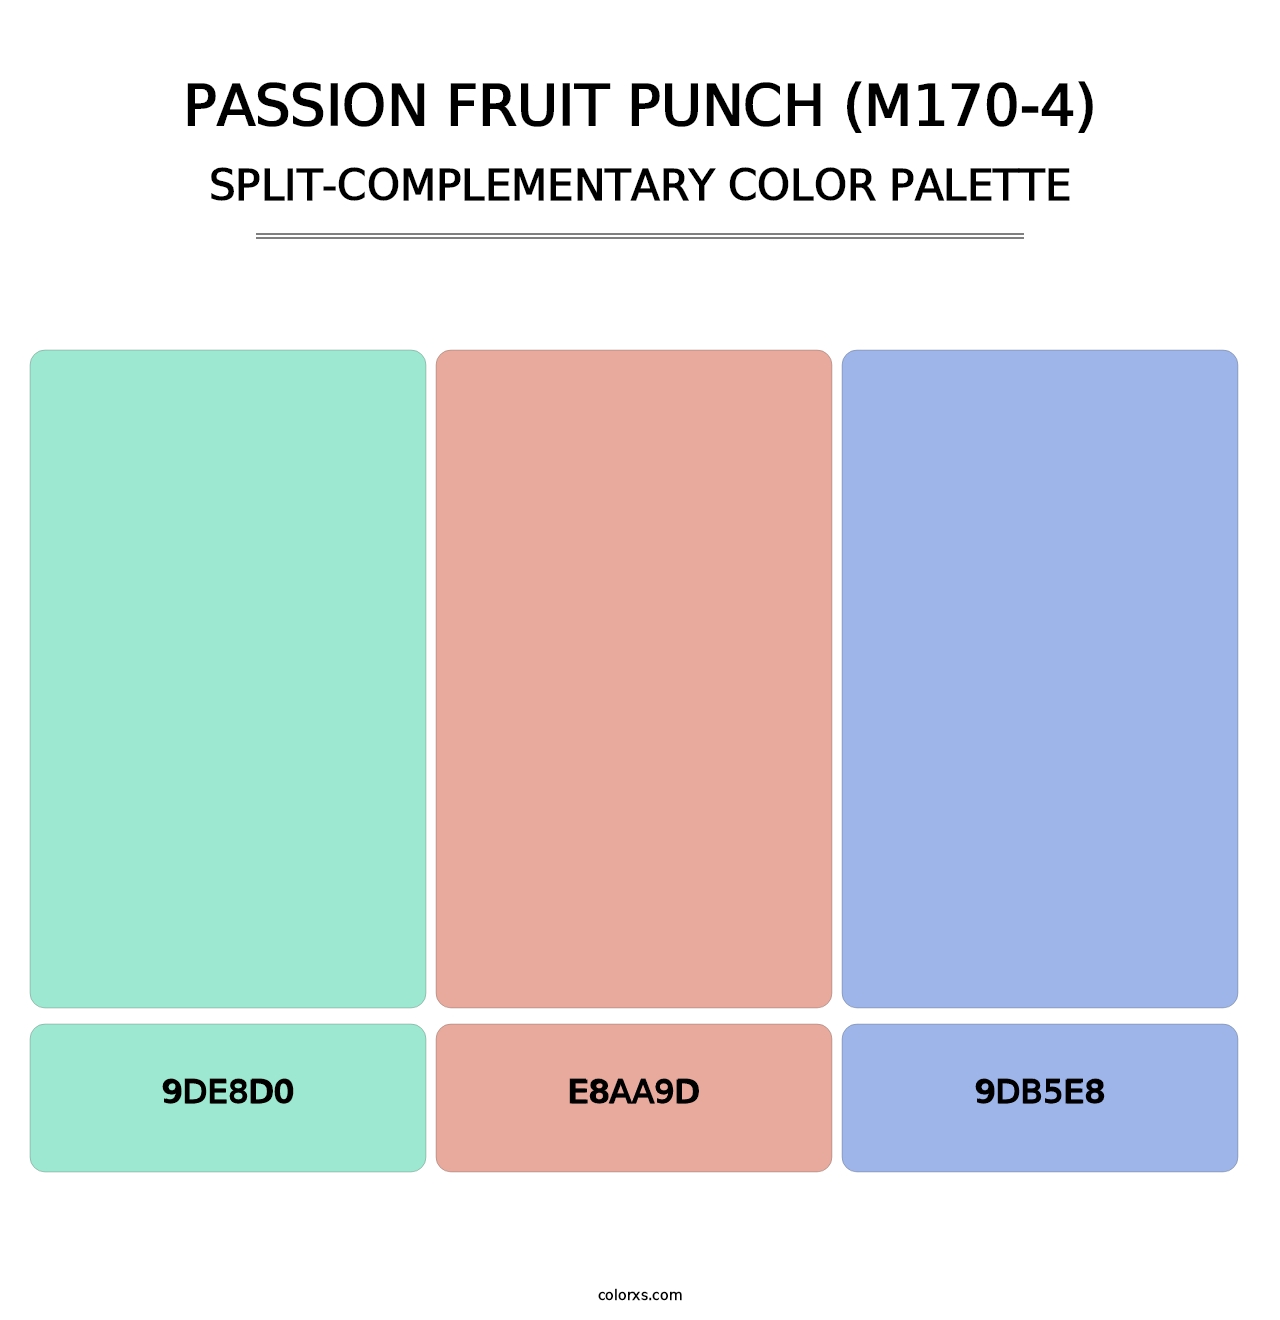 Passion Fruit Punch (M170-4) - Split-Complementary Color Palette